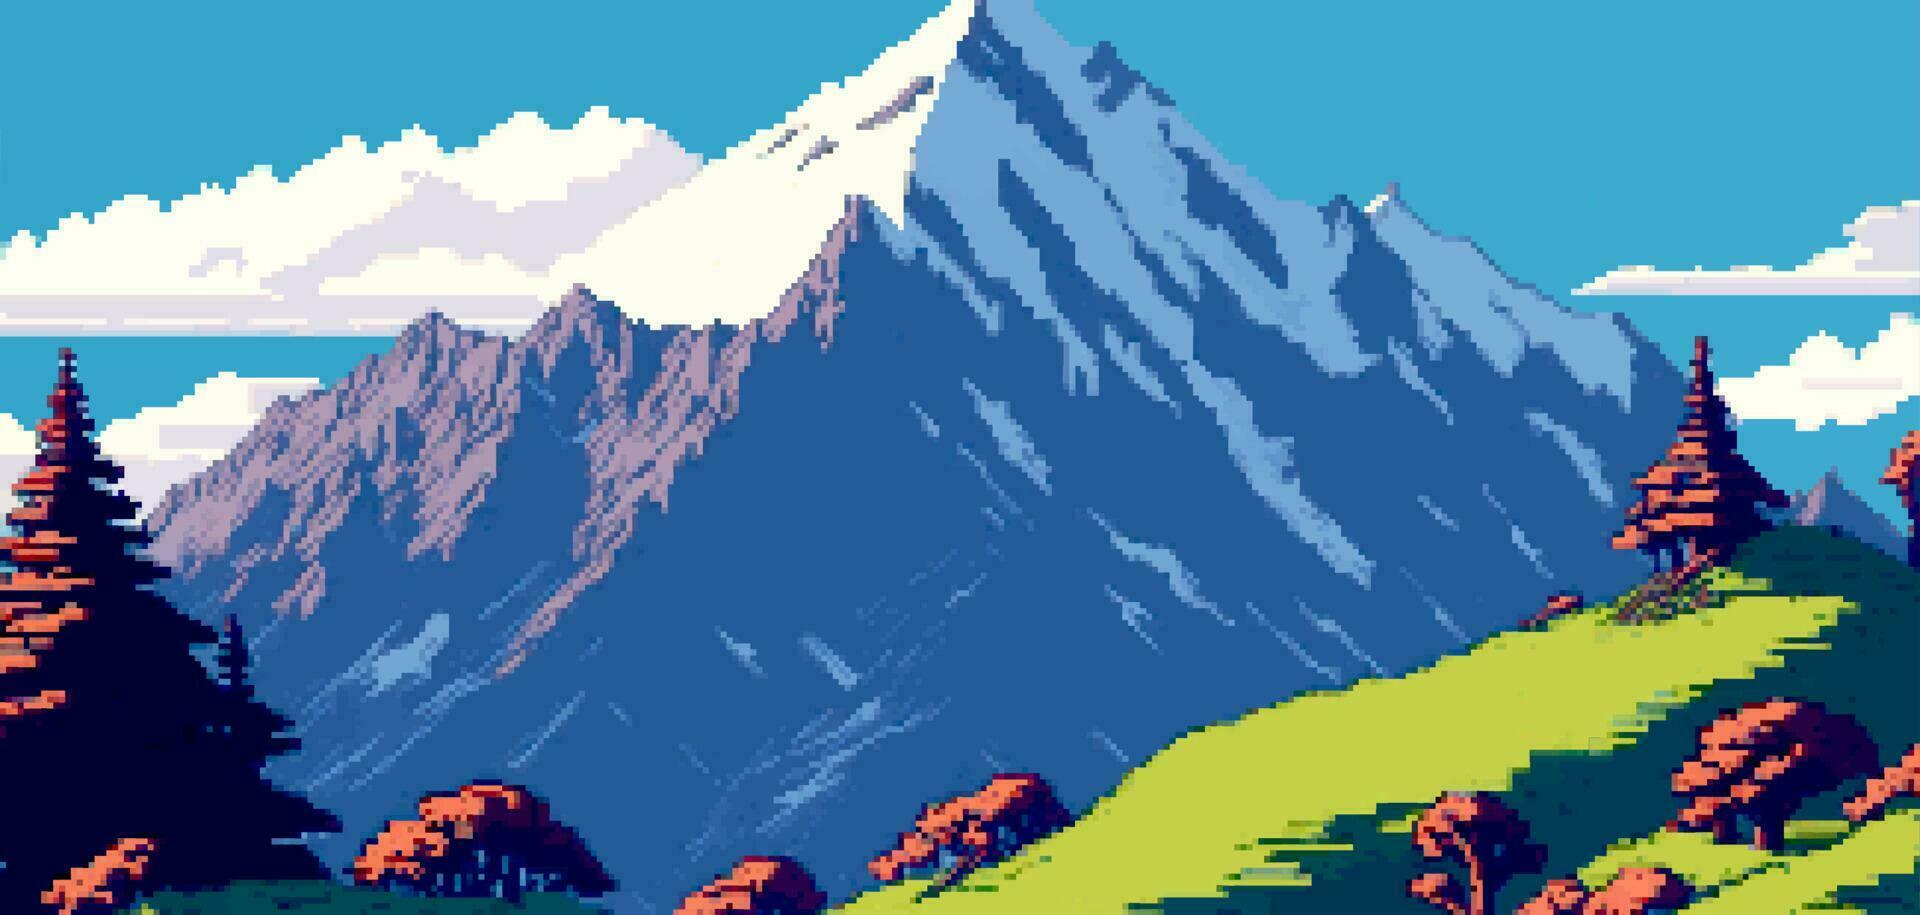 paisaje 8 bits píxel Arte. verano natural paisaje montaña paisaje arcada vídeo juego antecedentes vector